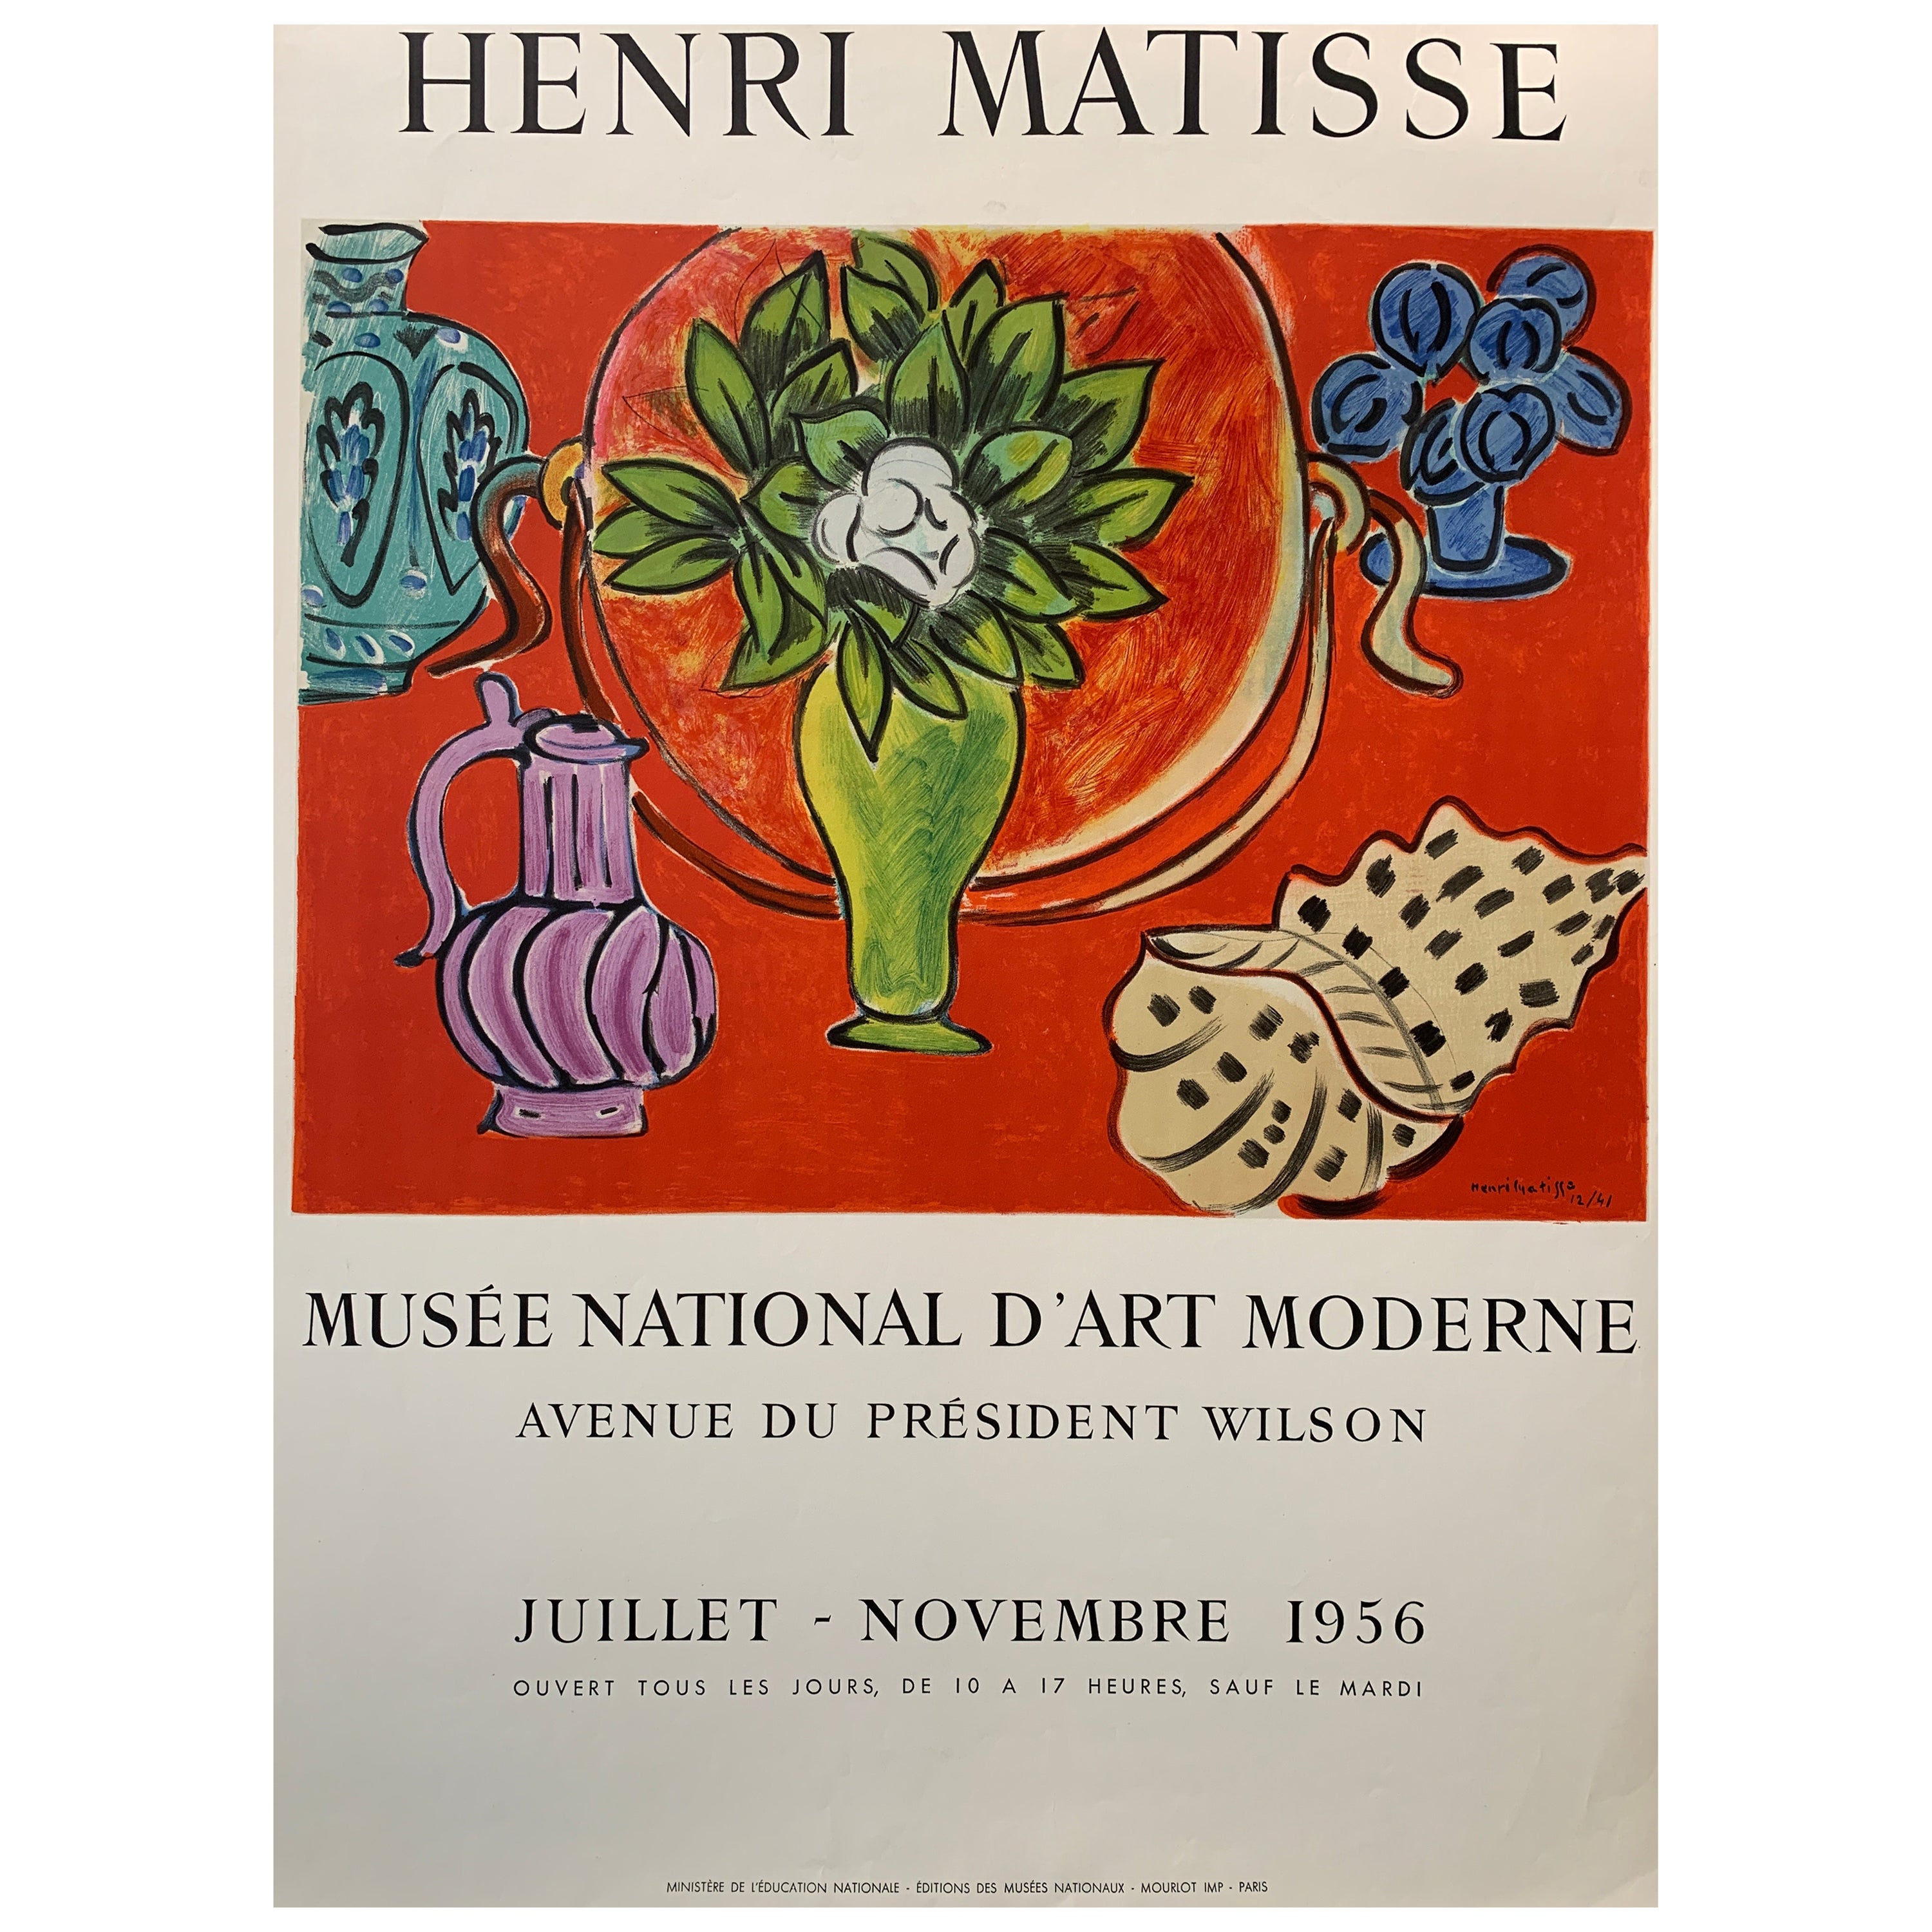 Henri Matisse, manifesto originale della mostra "Musee National D'art Moderne", 1956